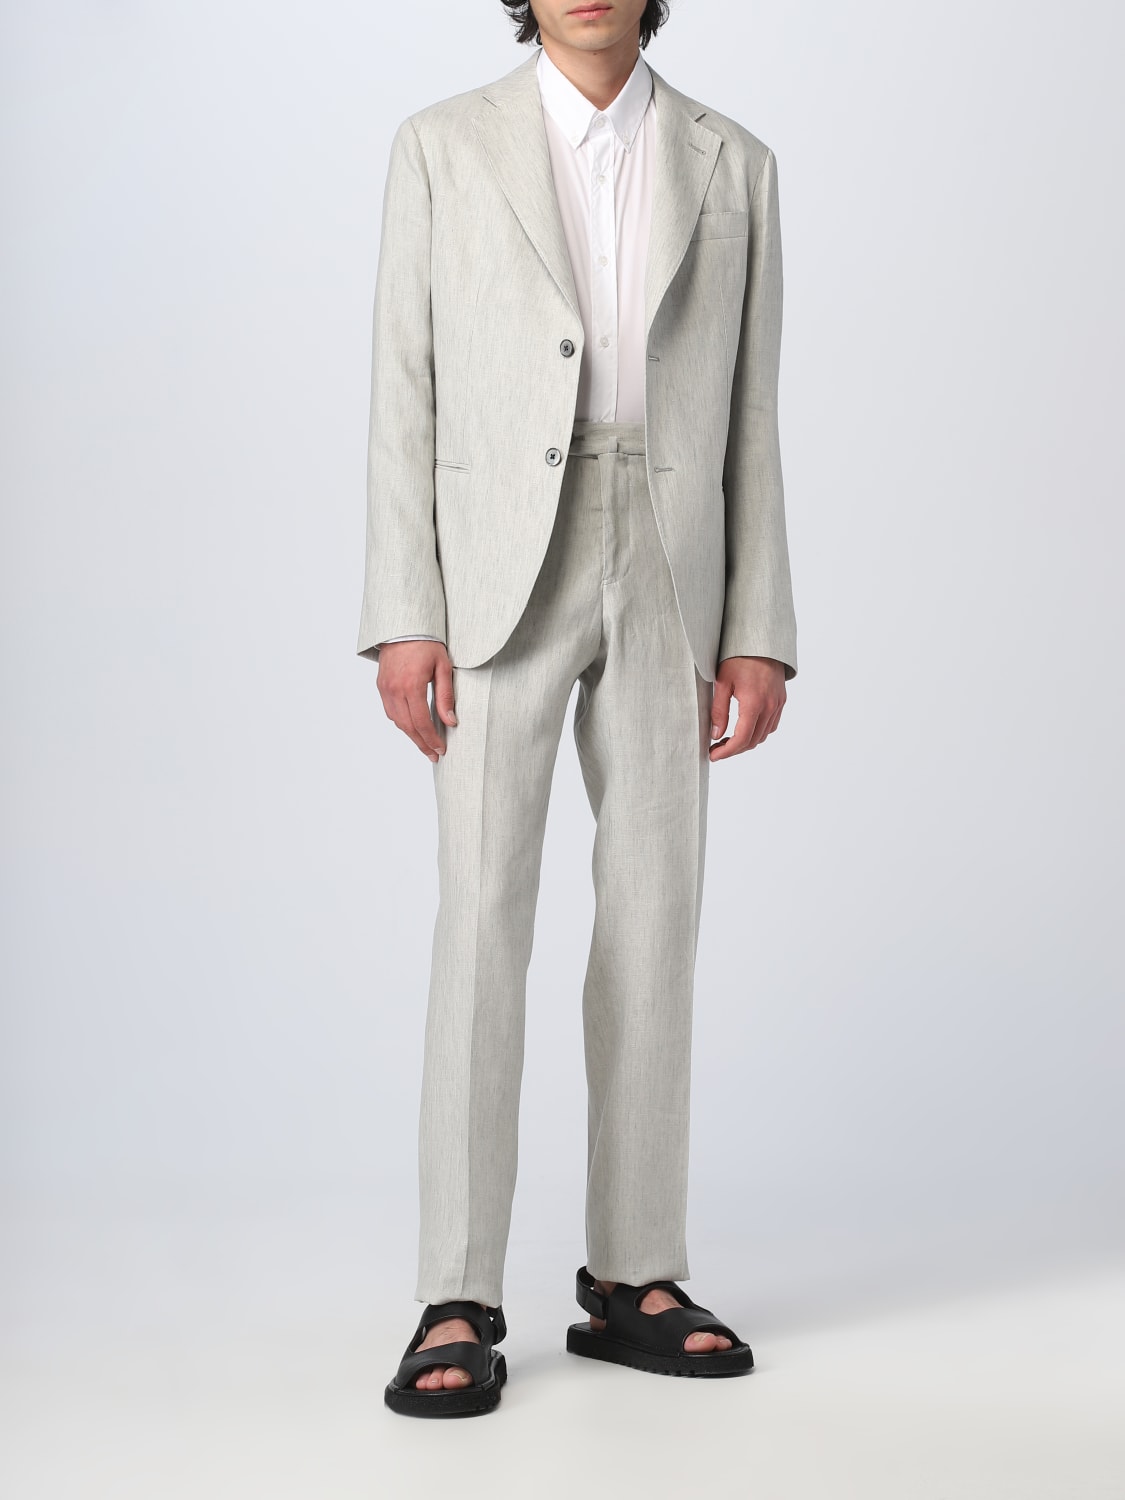 Meningsløs sjæl reservedele EMPORIO ARMANI: suit for man - Grey | Emporio Armani suit D41VC8D1516  online on GIGLIO.COM